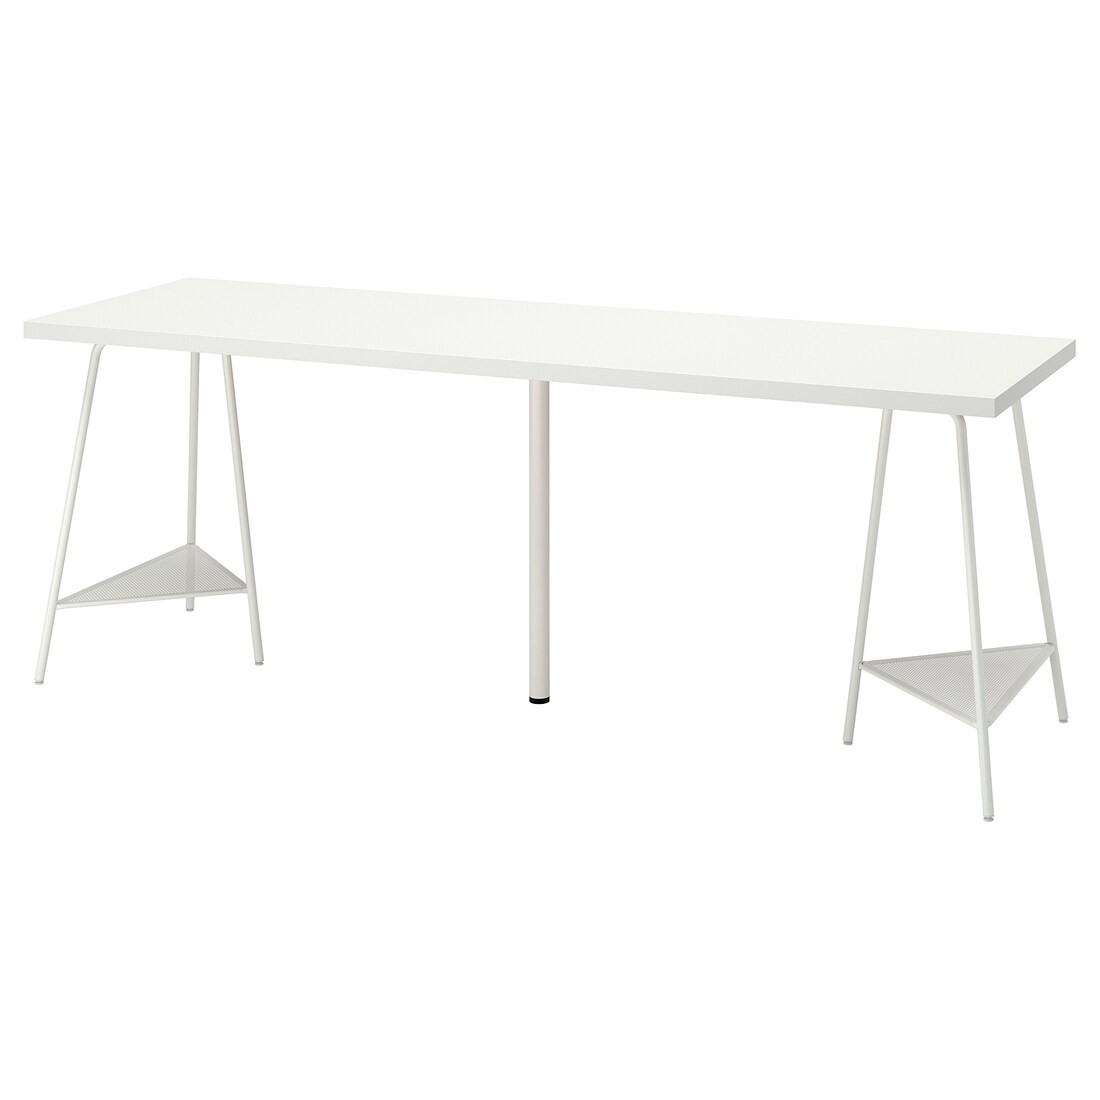 IKEA LAGKAPTEN ЛАГКАПТЕН / TILLSLAG ТИЛЛЬСЛАГ Письменный стол, белый, 200x60 см 19417616 194.176.16